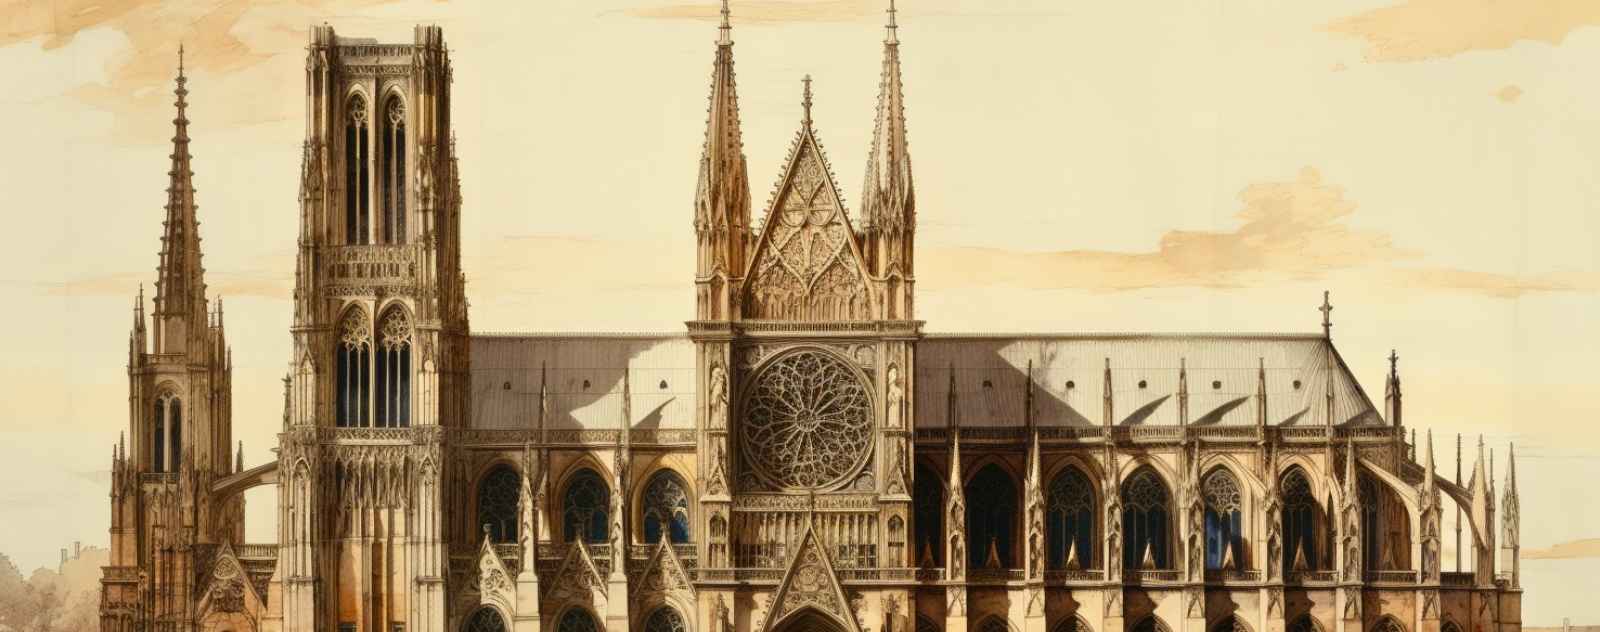 architecture art cathédrale